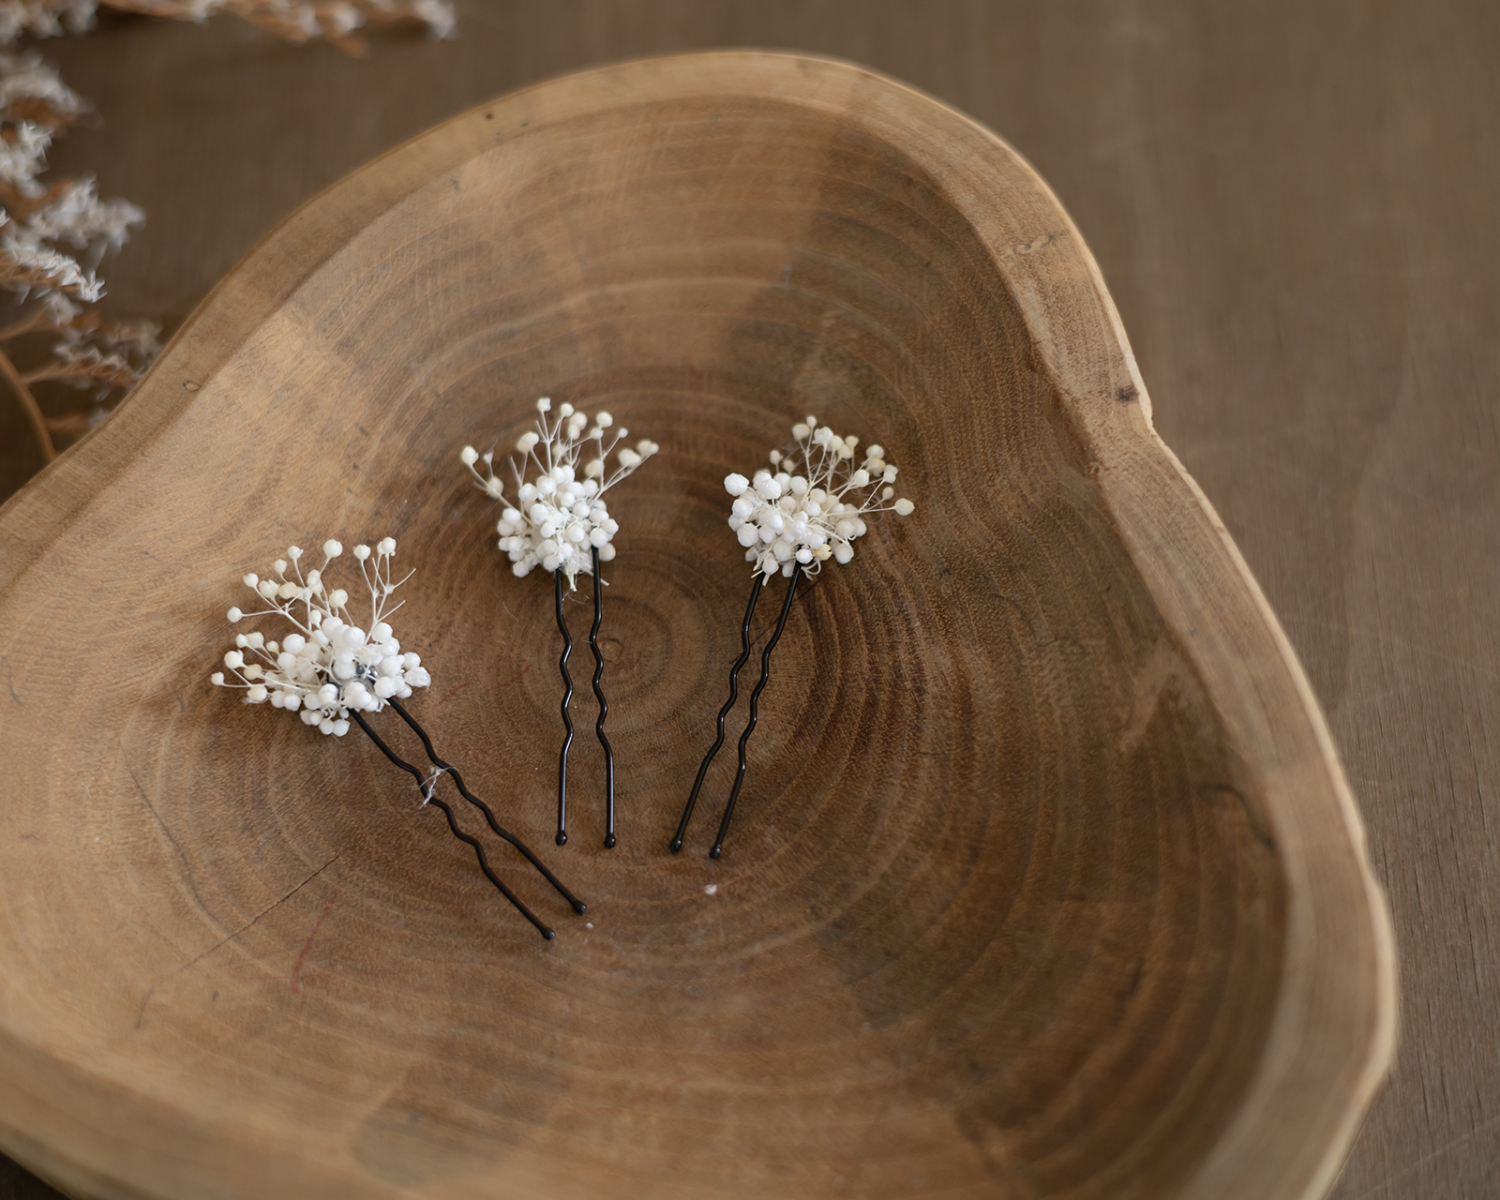 White floral hair pins - 3 pieces